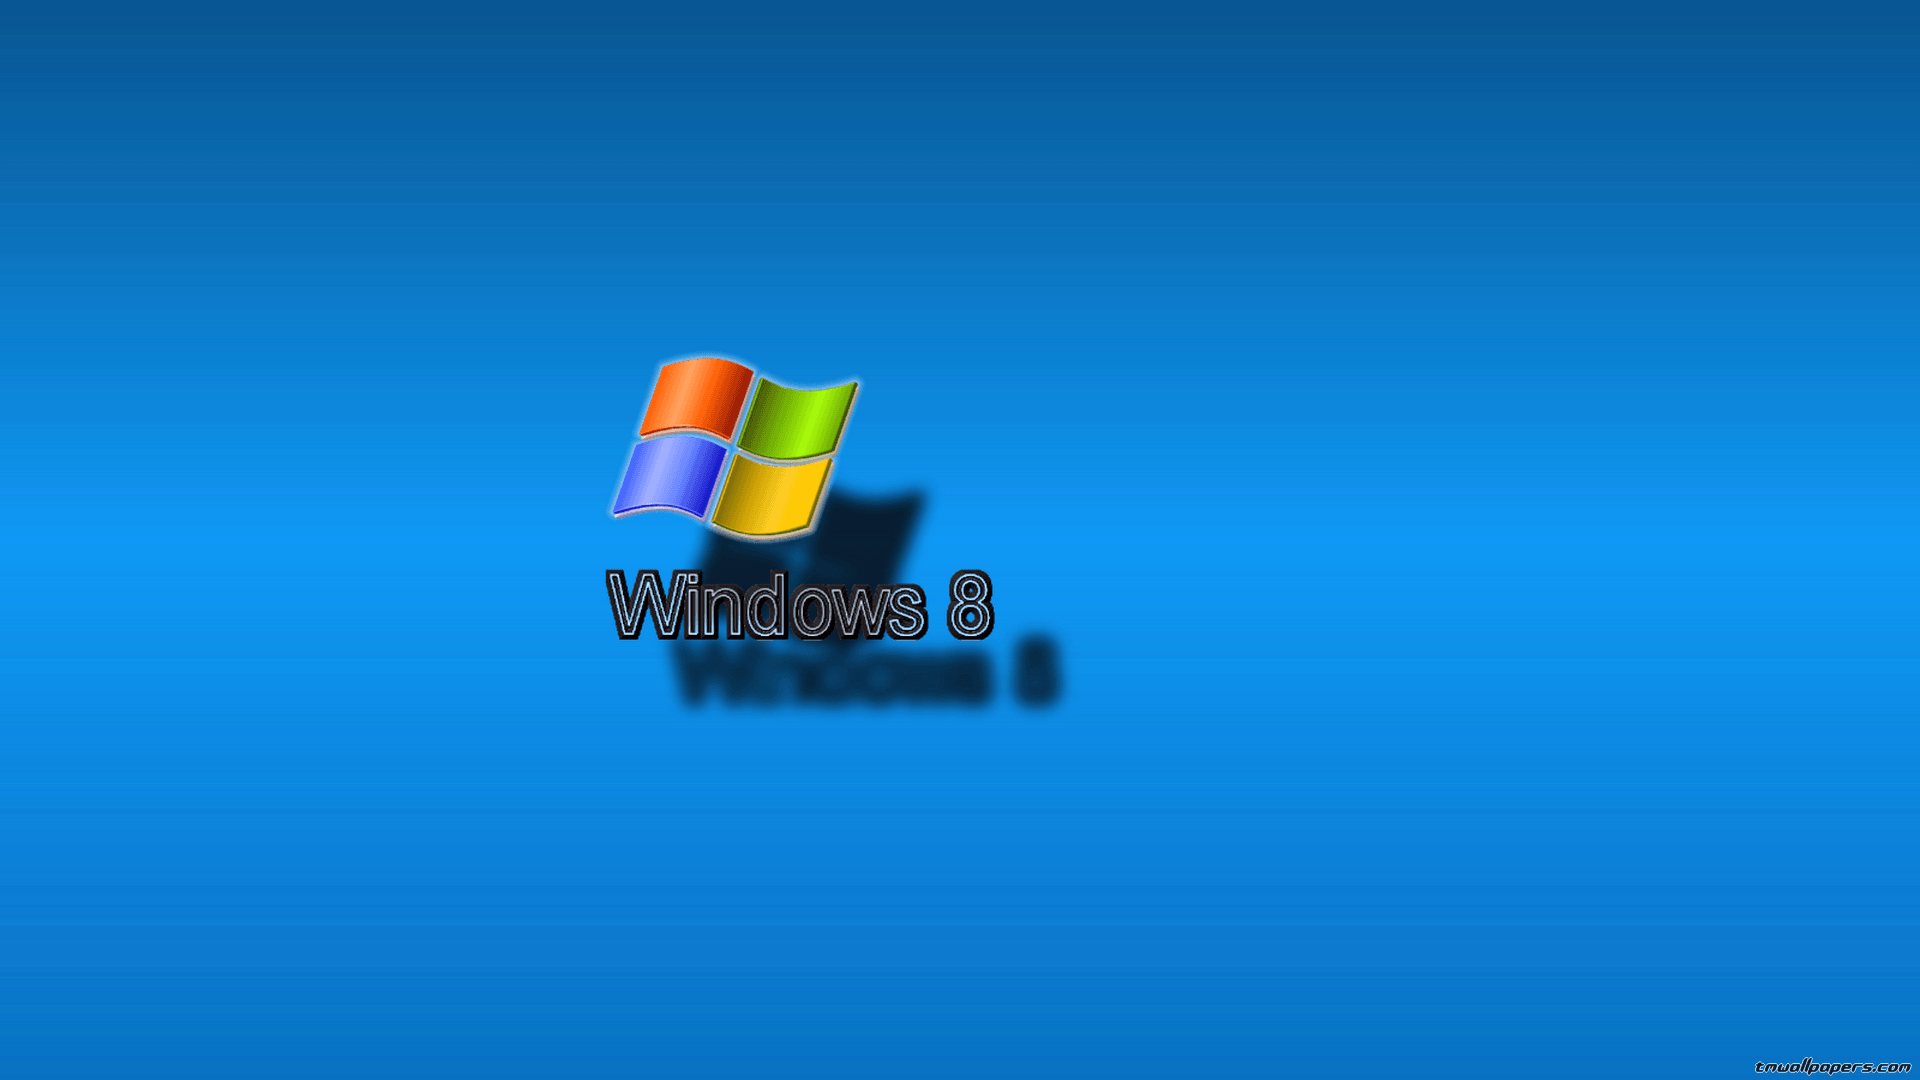 Wallpaper Windows 8 204140